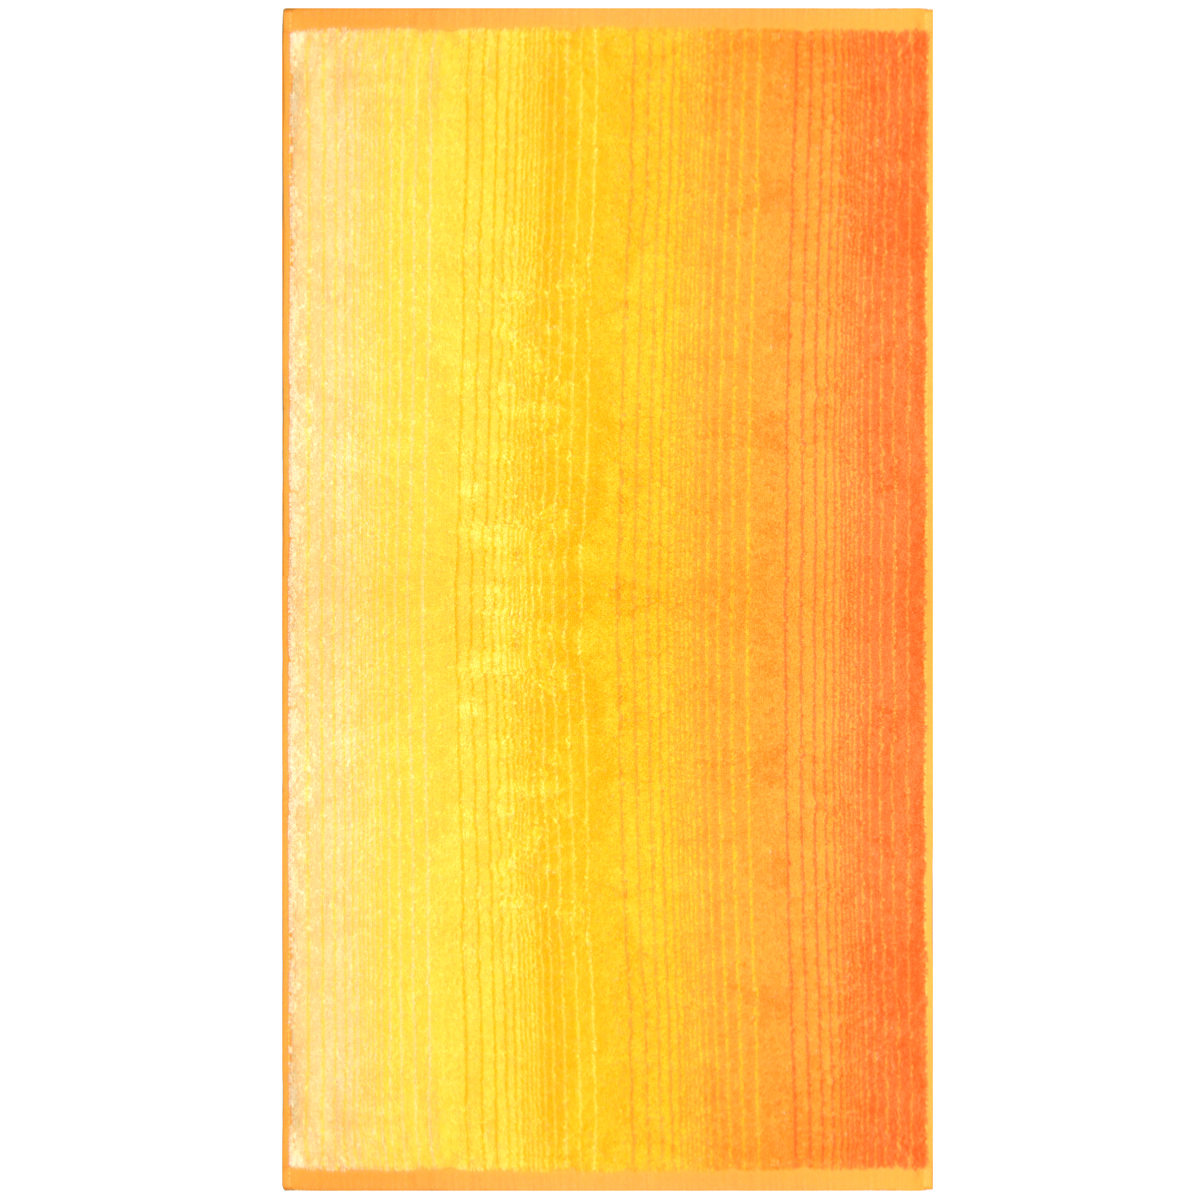 Dyckhoff Handtuch Colori gelb | 50x100 cm | Handtuch & Co